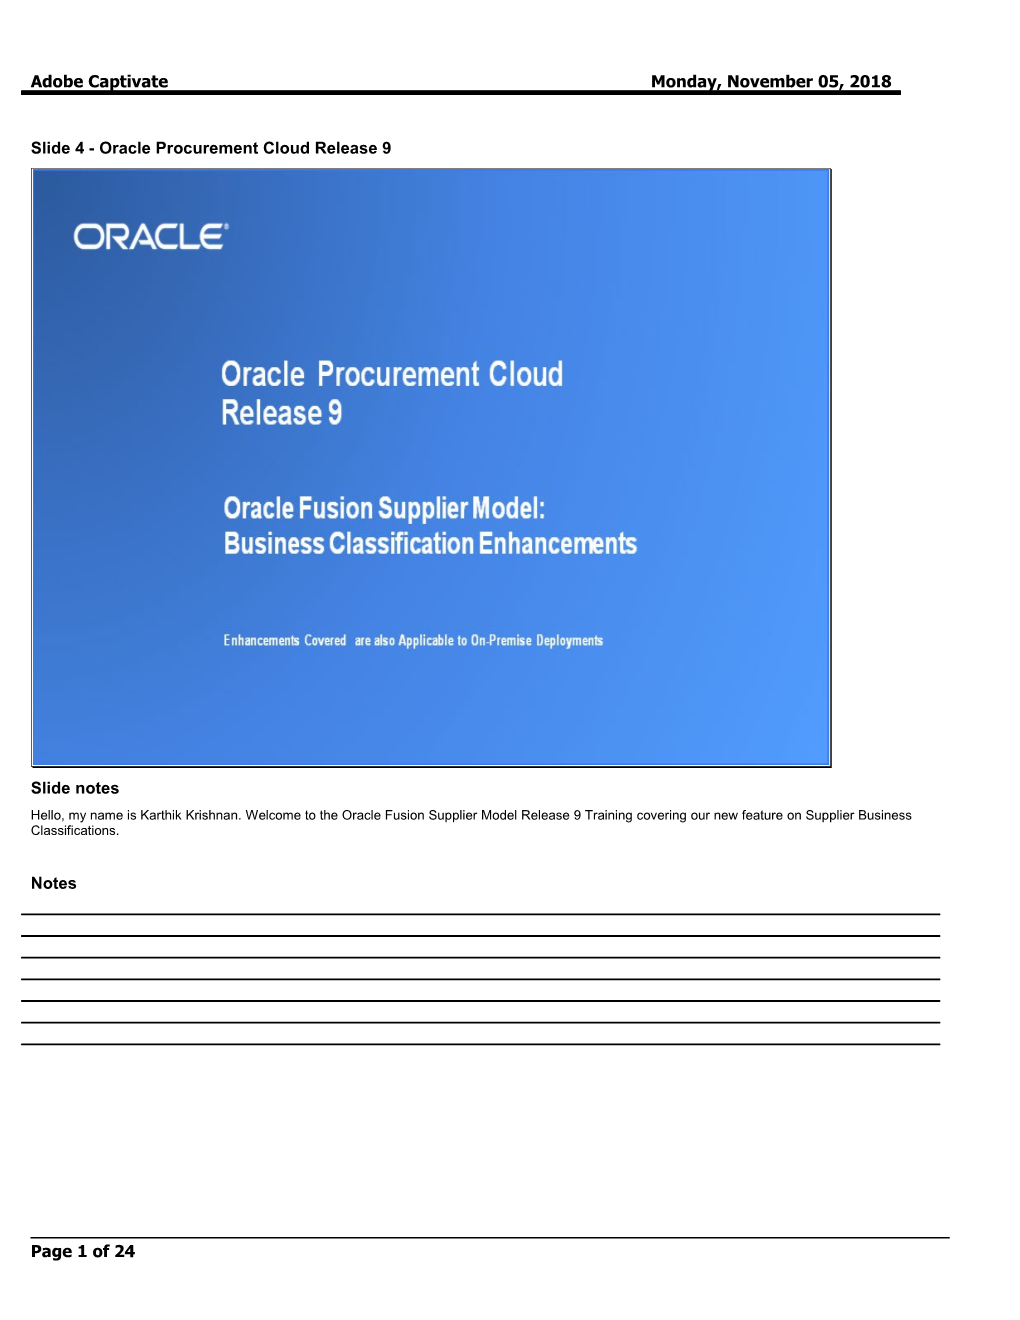 Slide 4 - Oracle Procurement Cloud Release 9